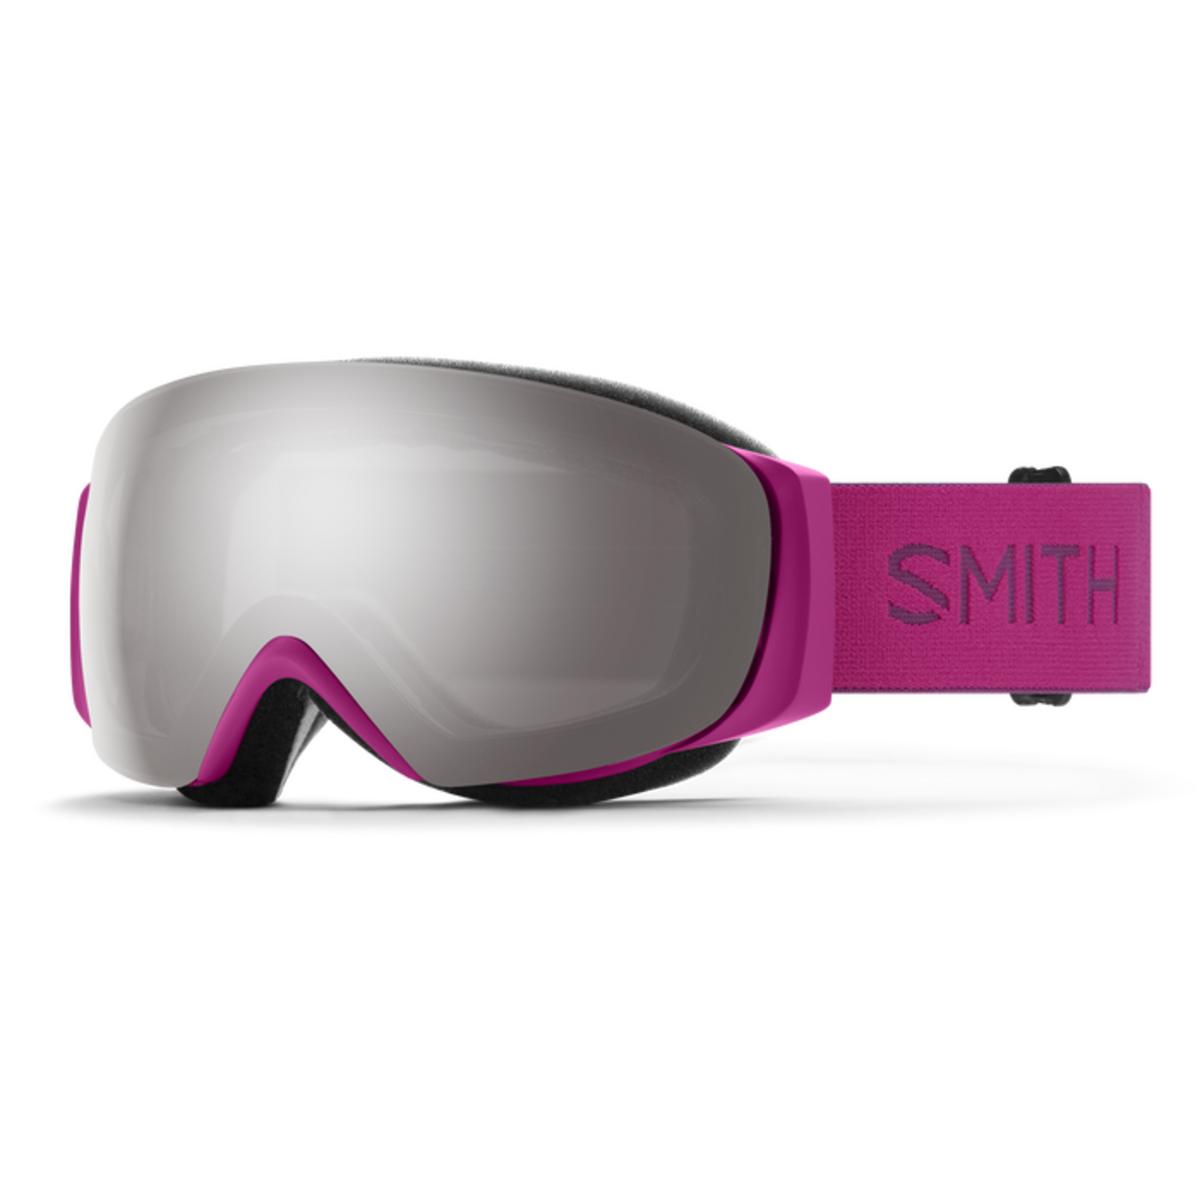 Smith I/O MAG S Goggles